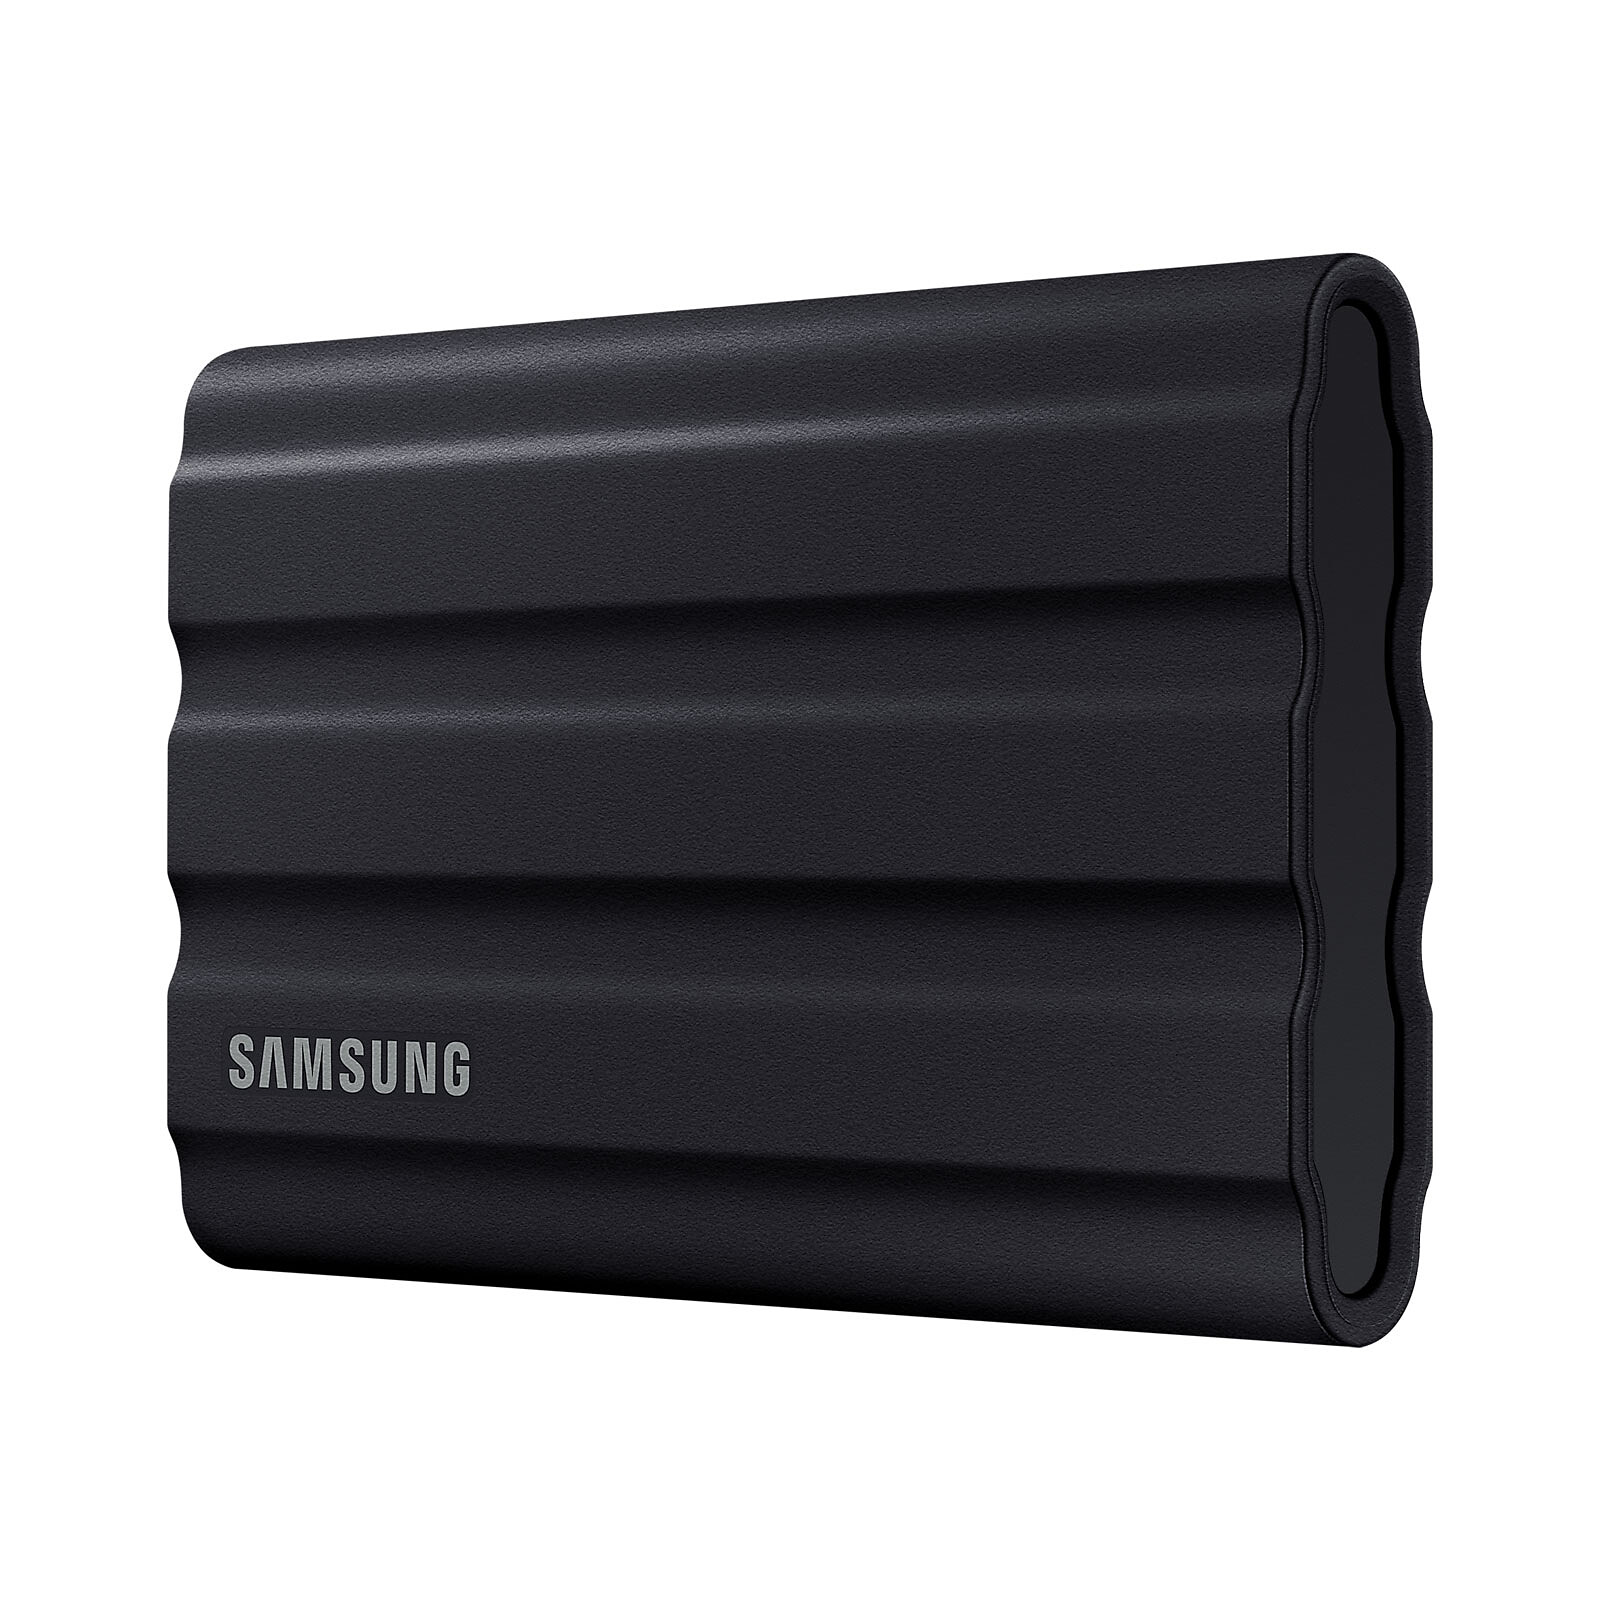 Samsung SSD External T7 Shield 2TB Black - External hard drive